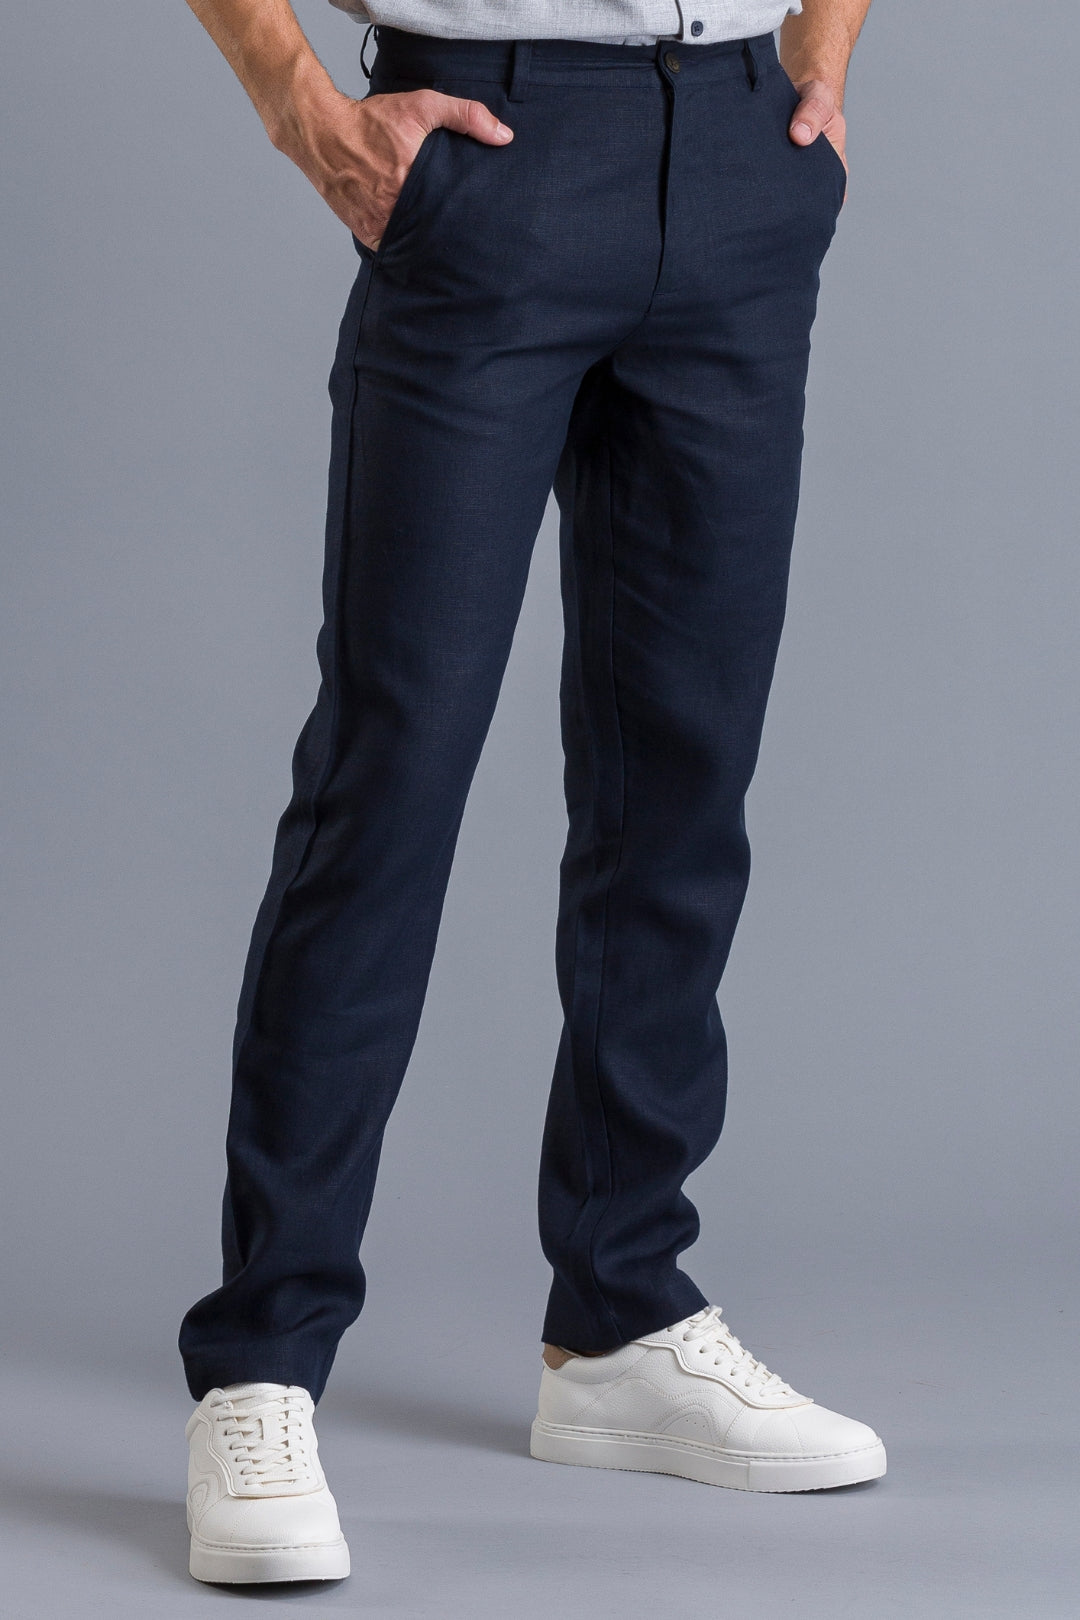 Navy blue linen trousers